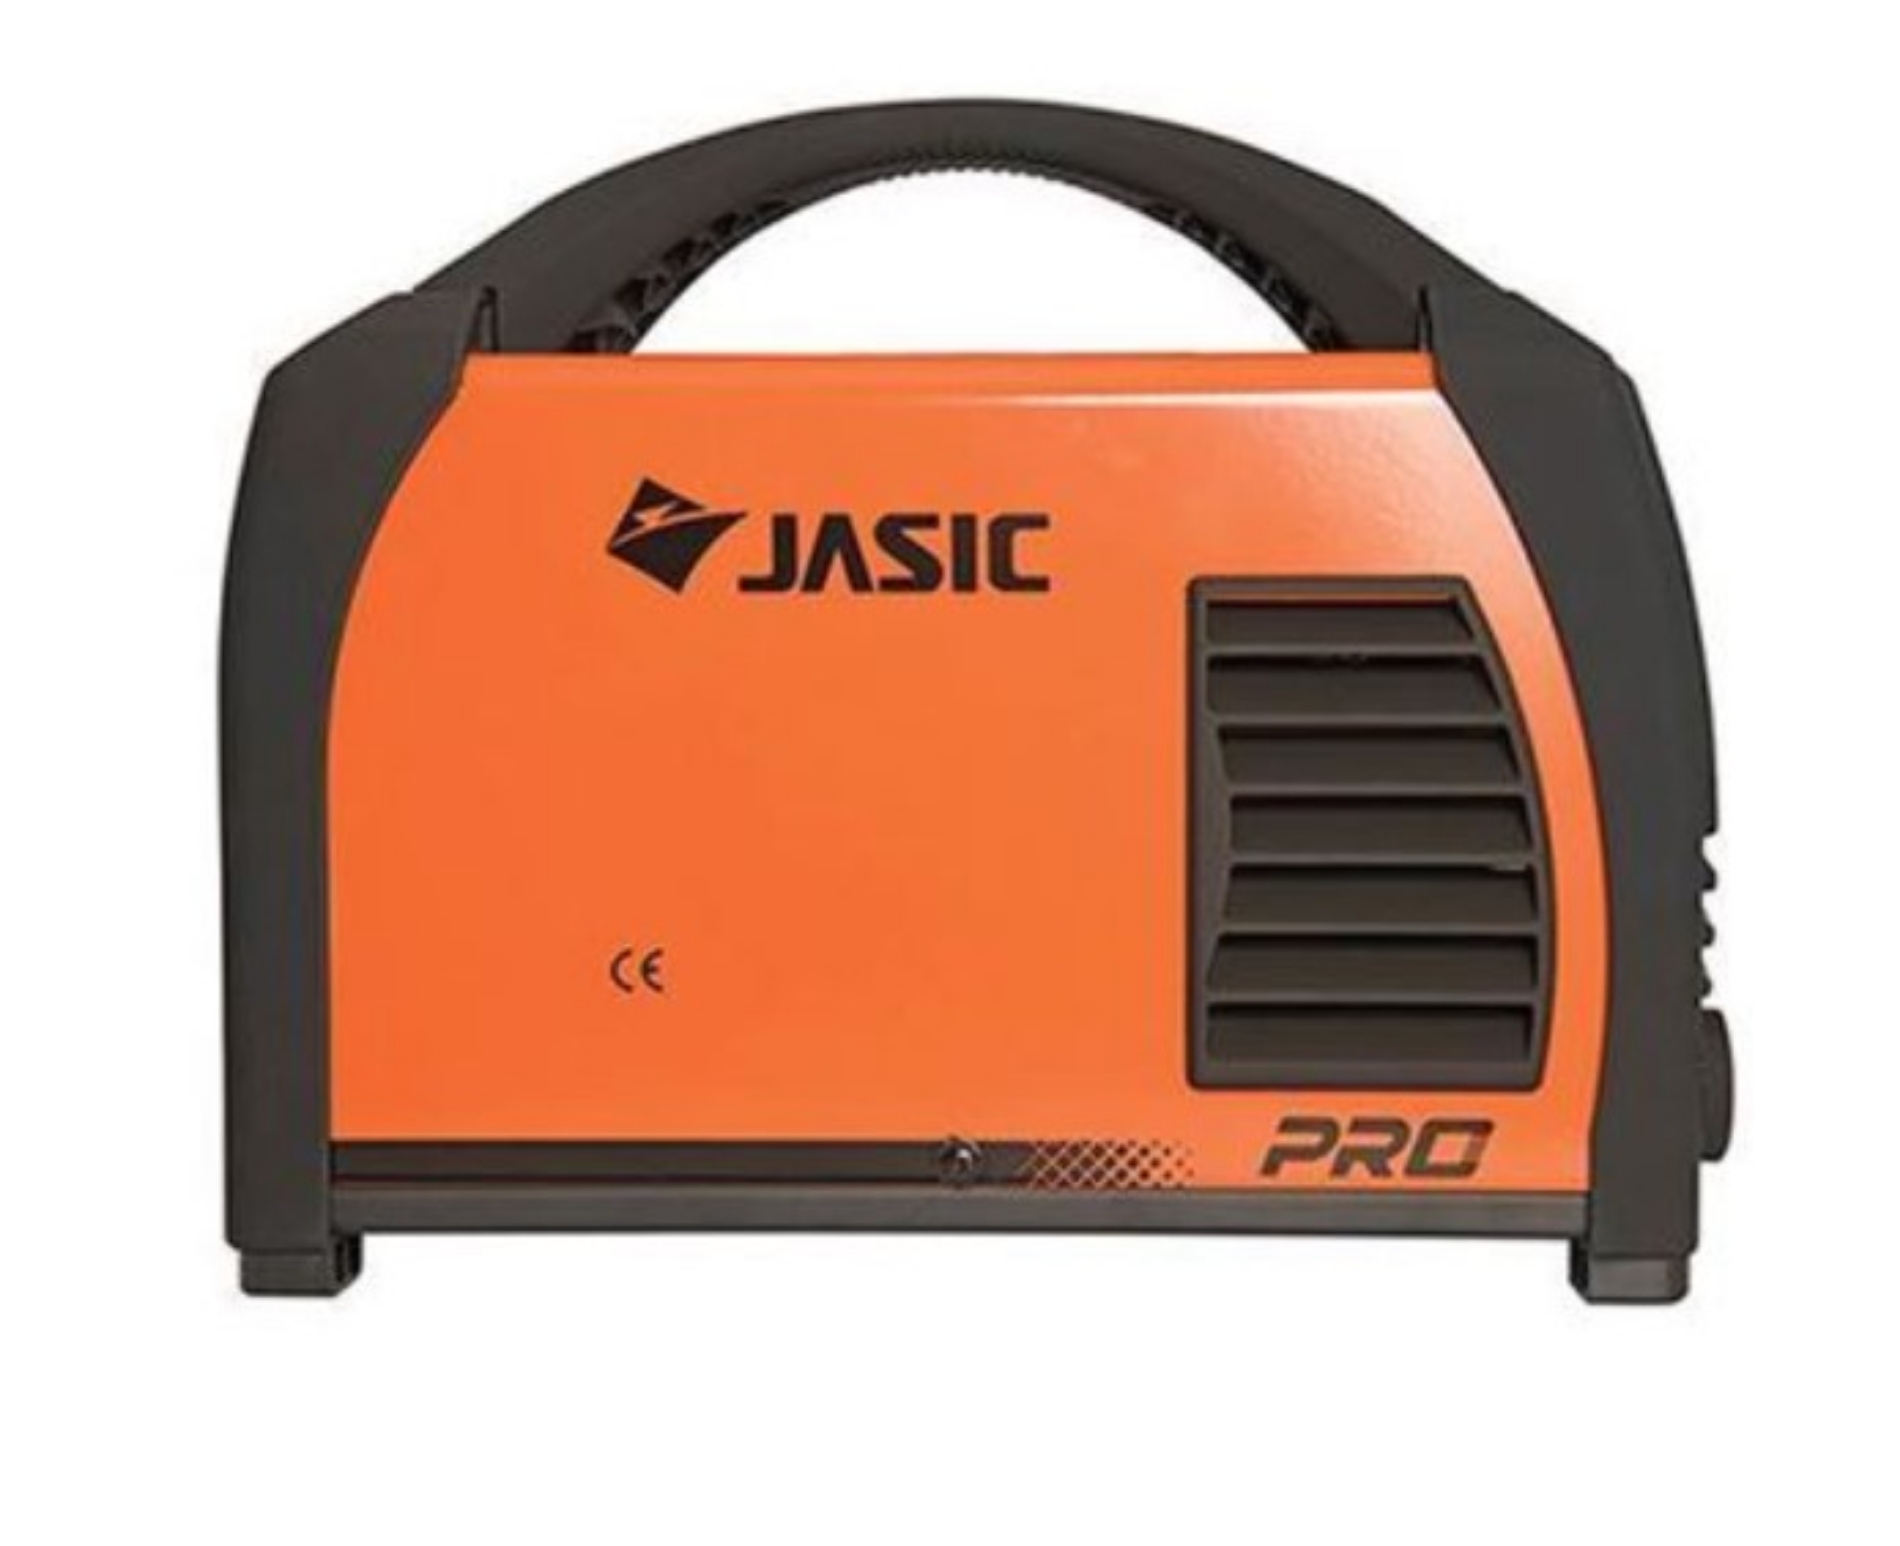  Jasic ARC 200 PFC 3